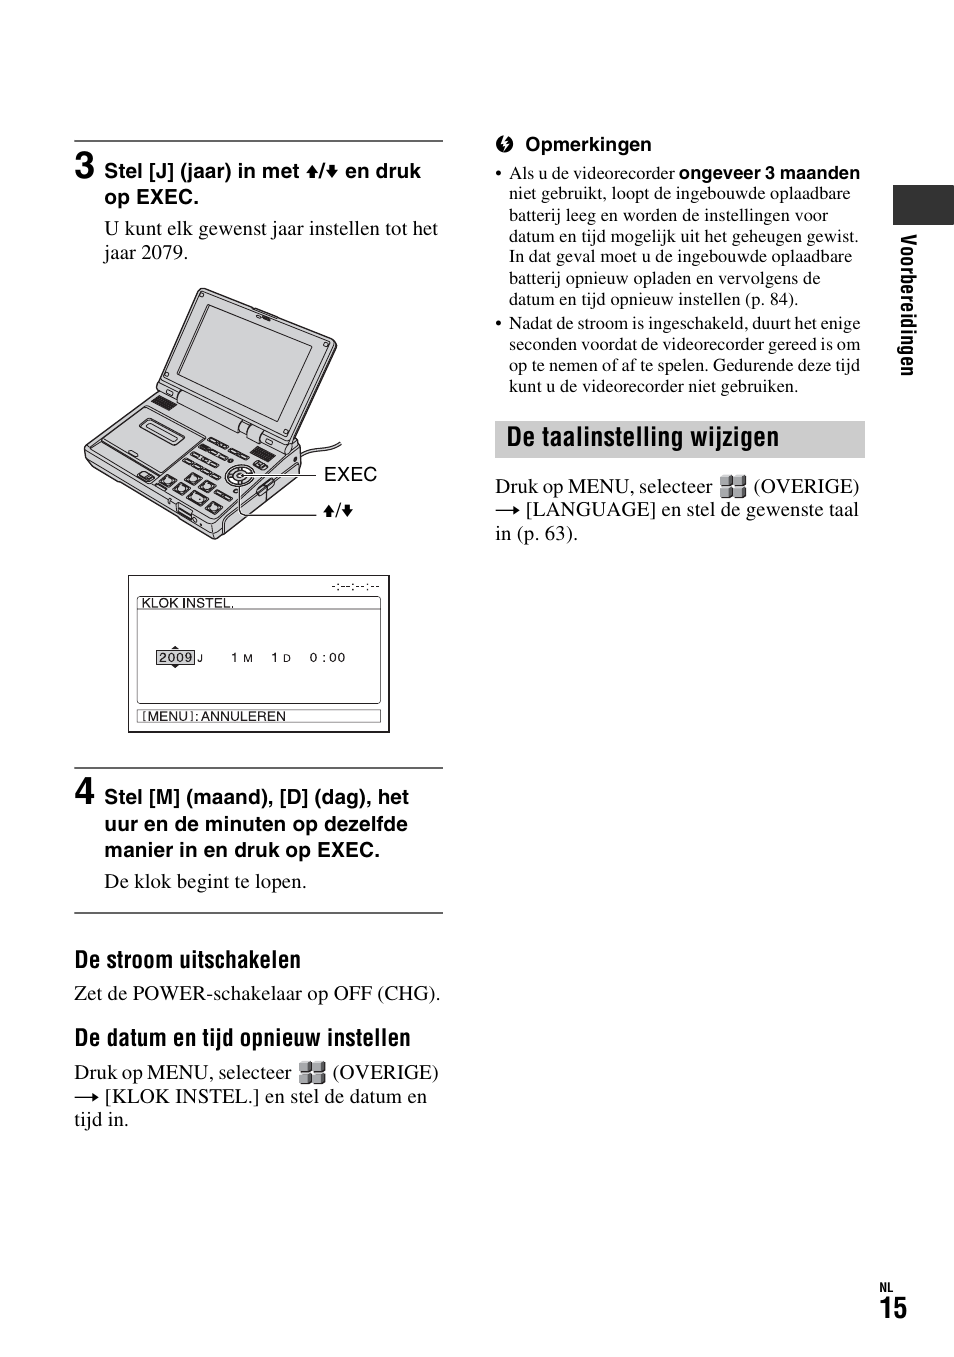 De taalinstelling wijzigen | Инструкция по эксплуатации Sony GV-HD700E | Страница 15 / 207